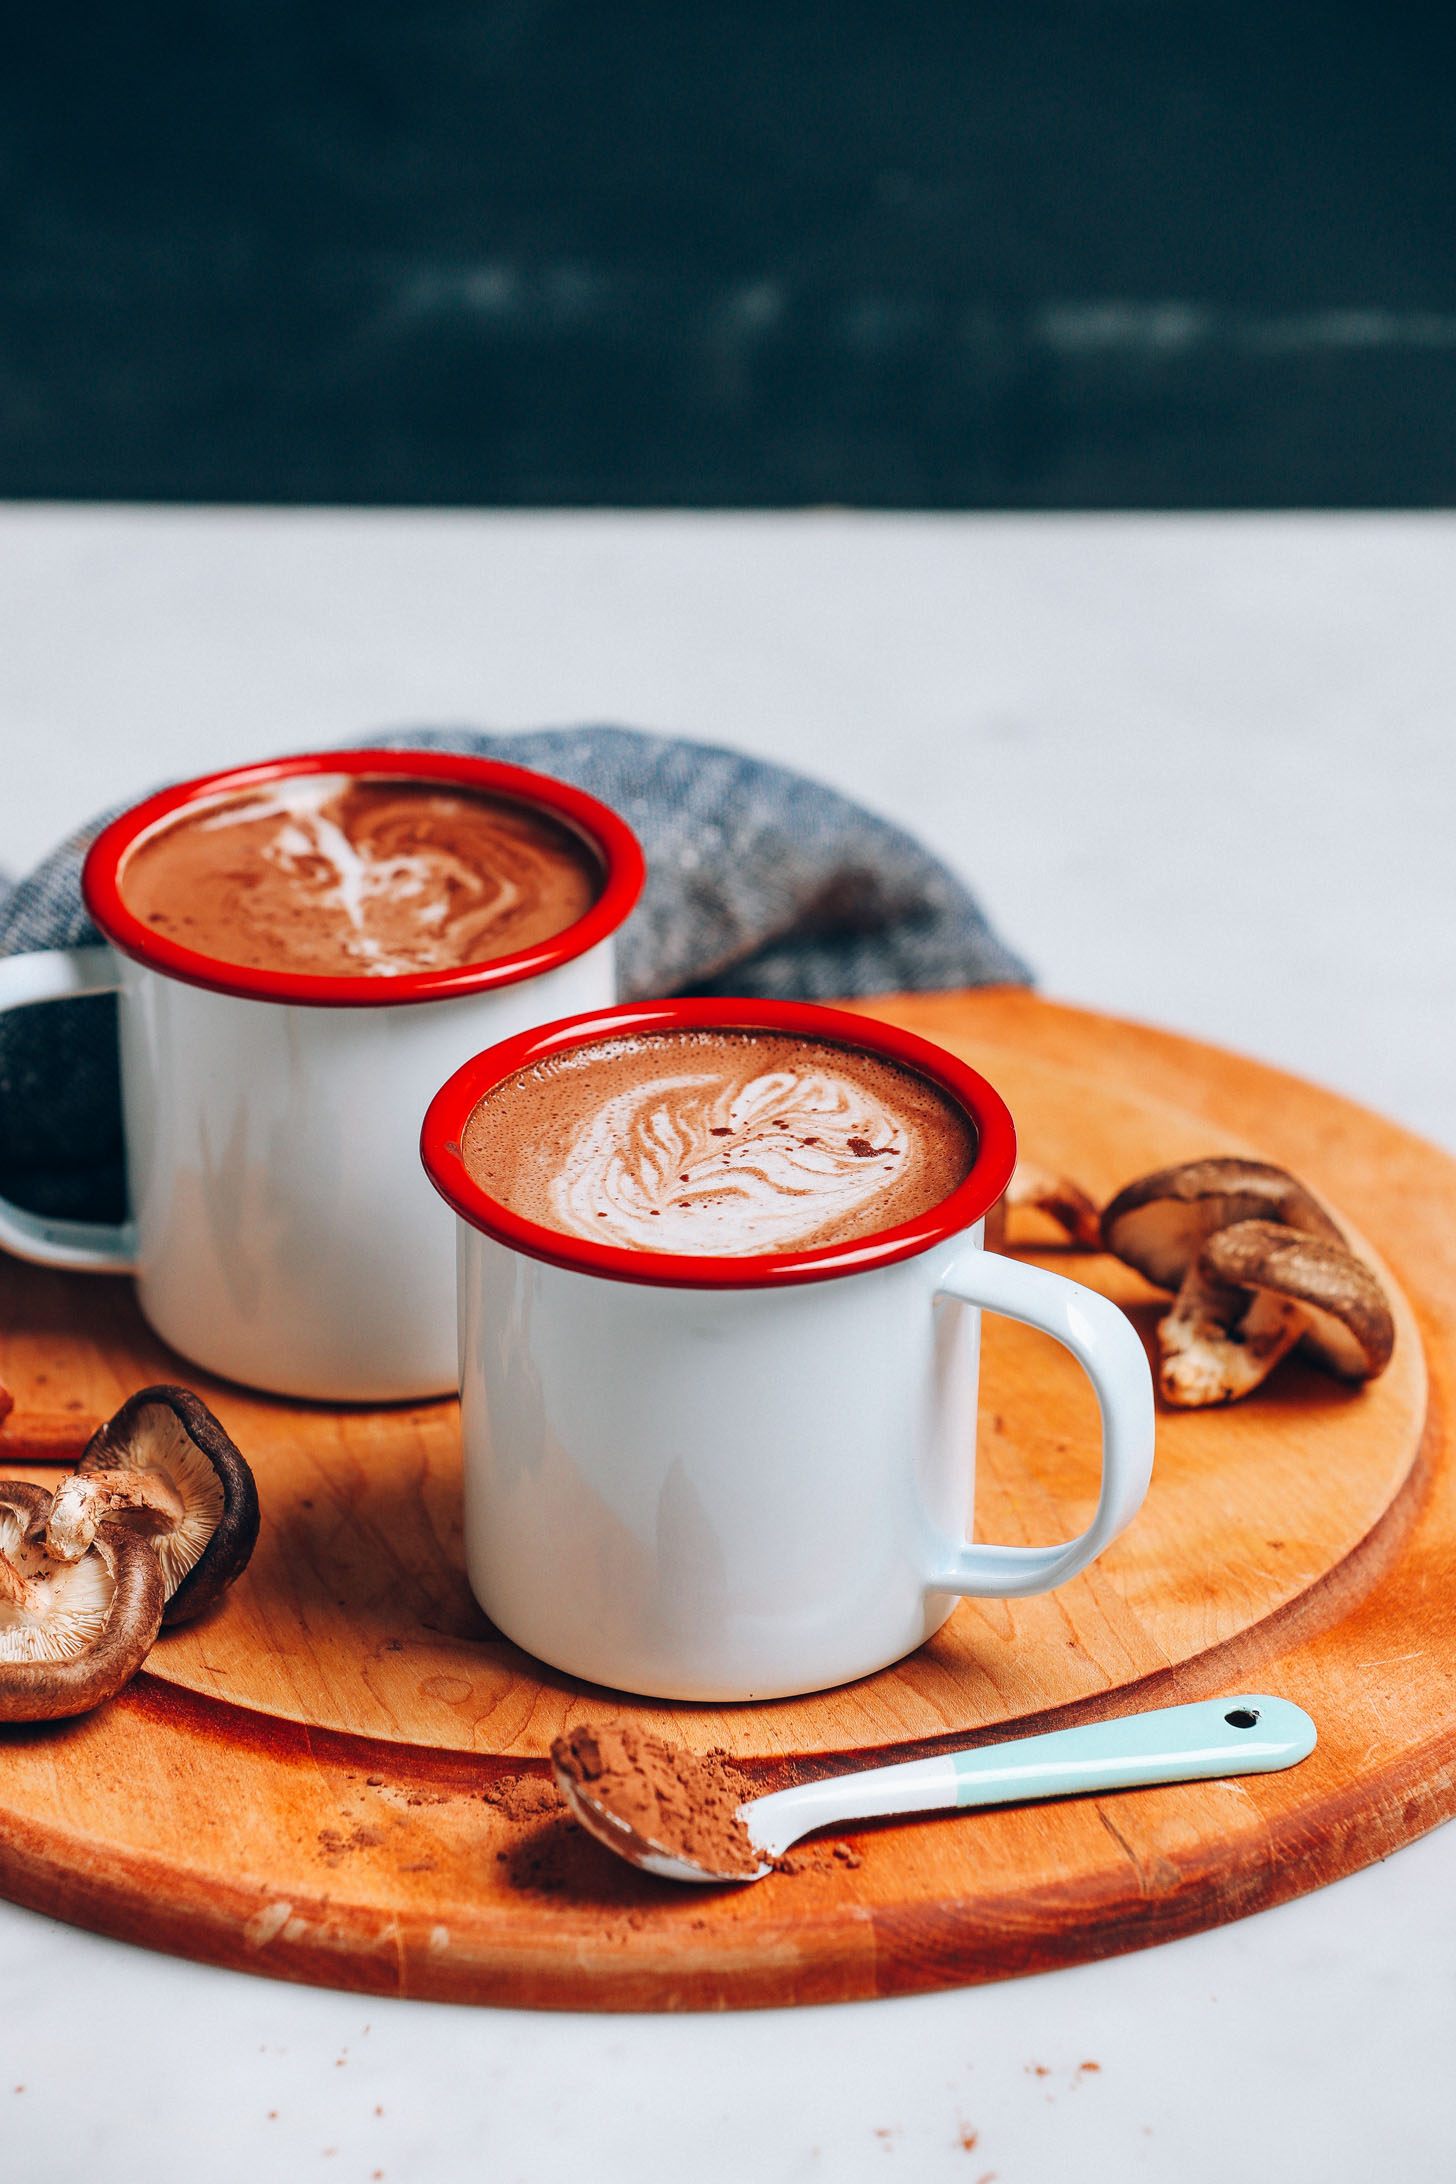 5-Minute Vegan Mushroom Latte